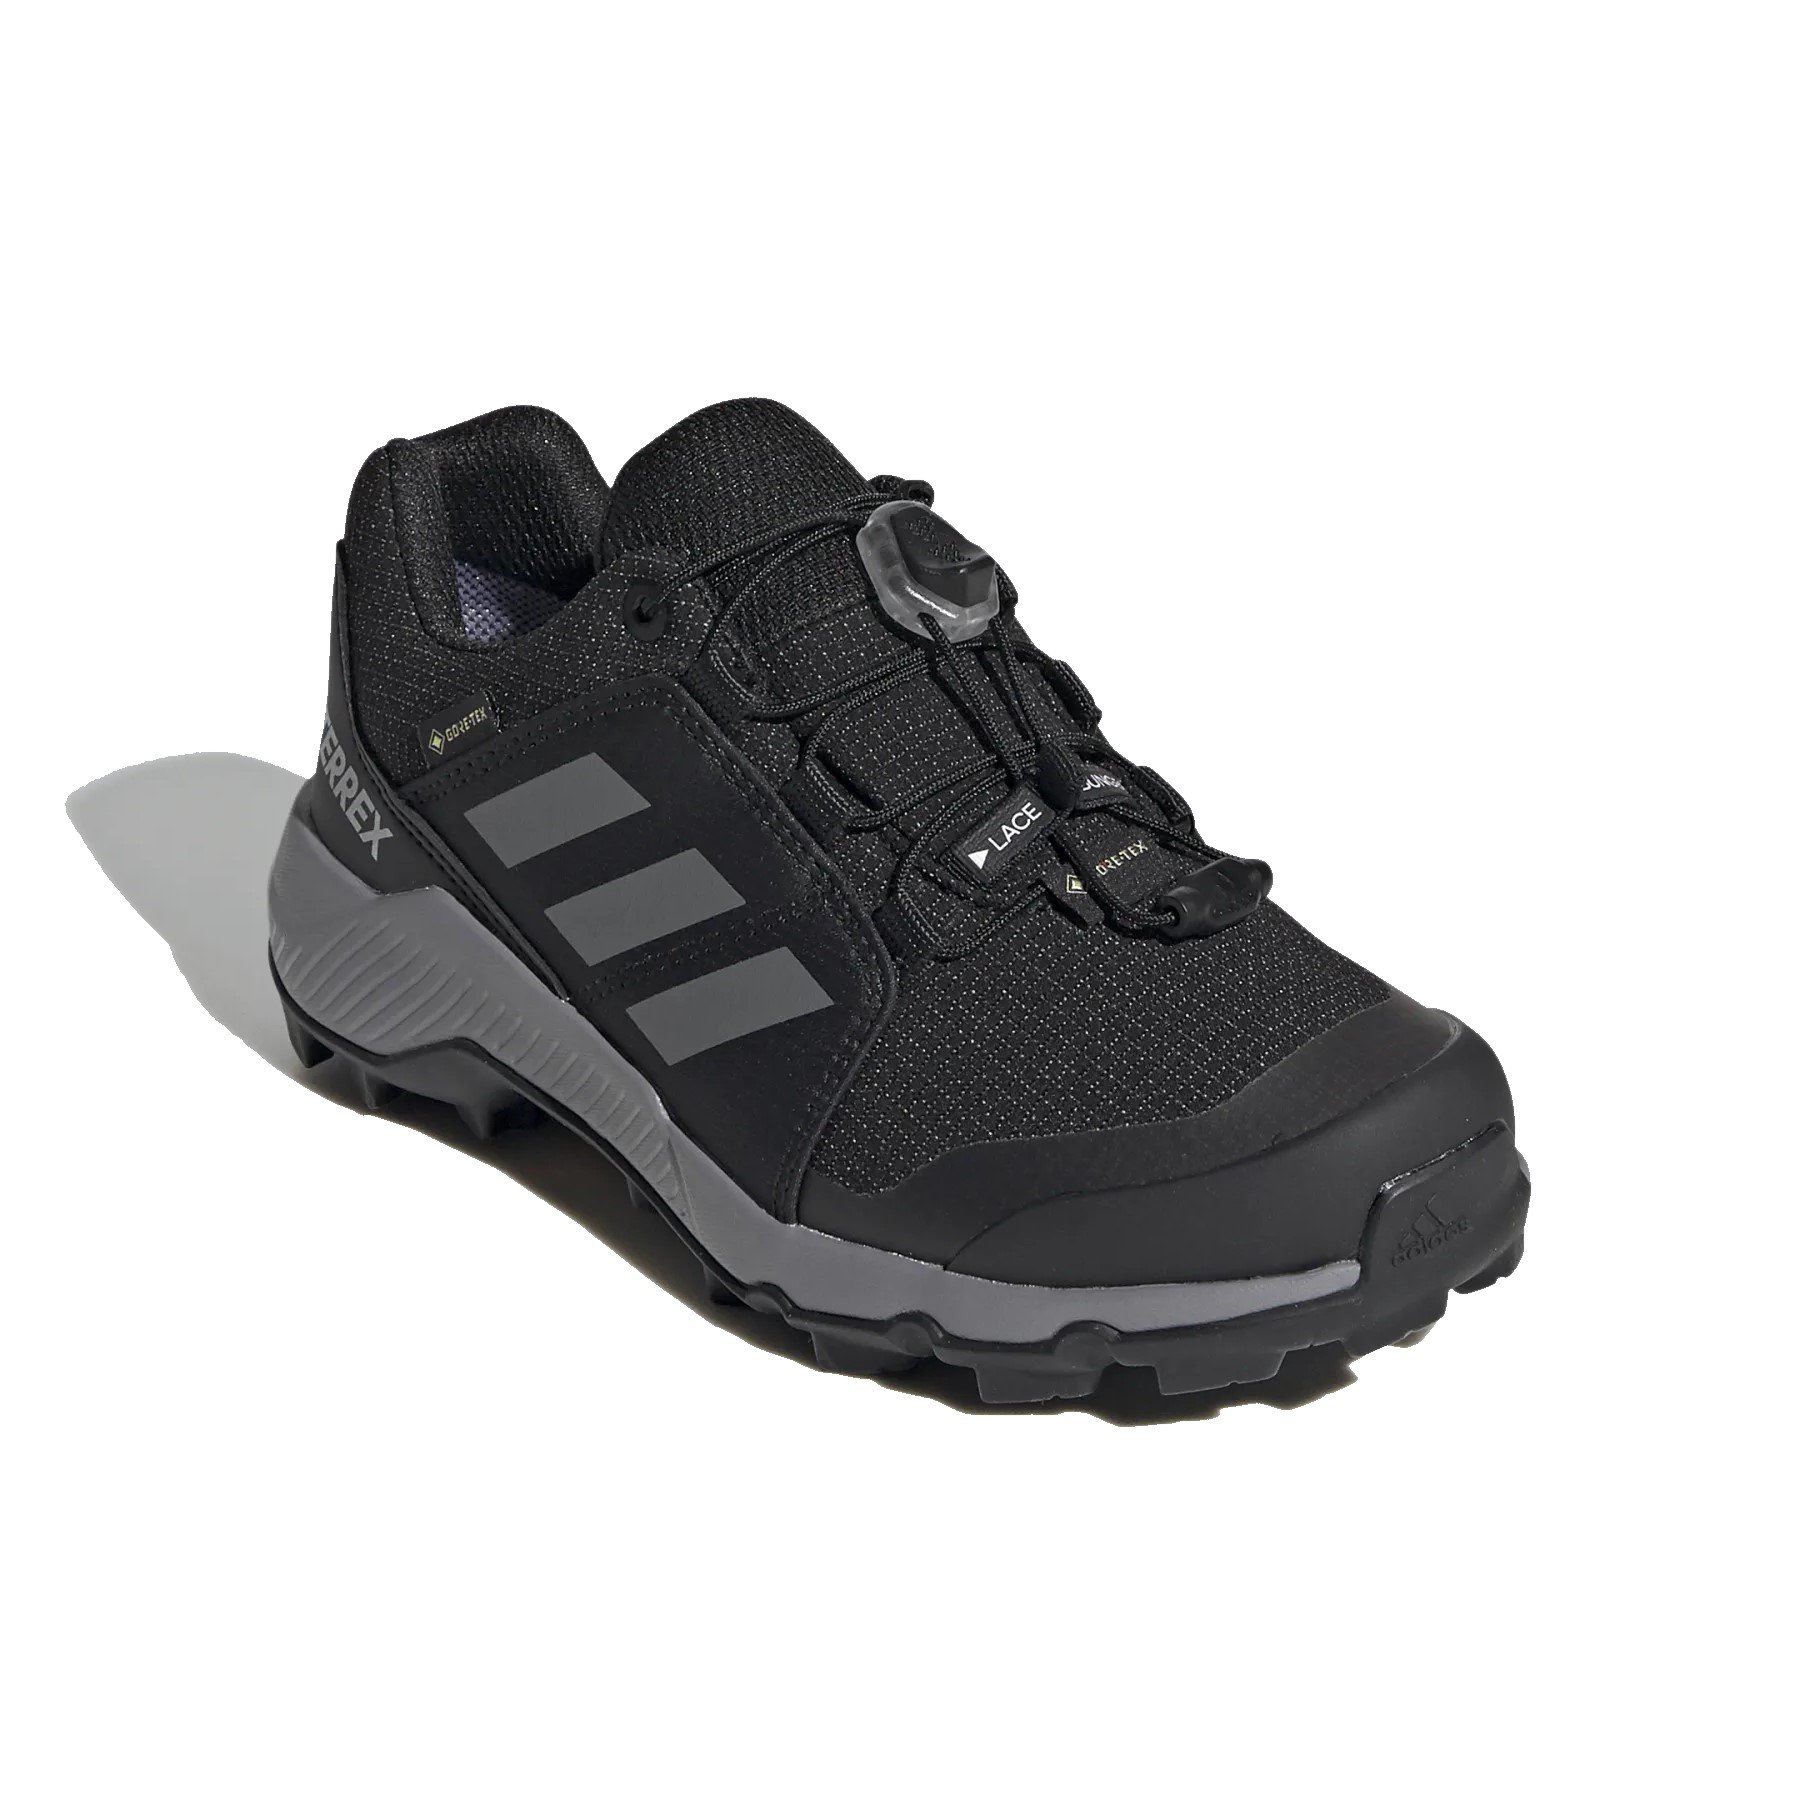 Topánky Adidas Terrex GTX J FU7268 - black